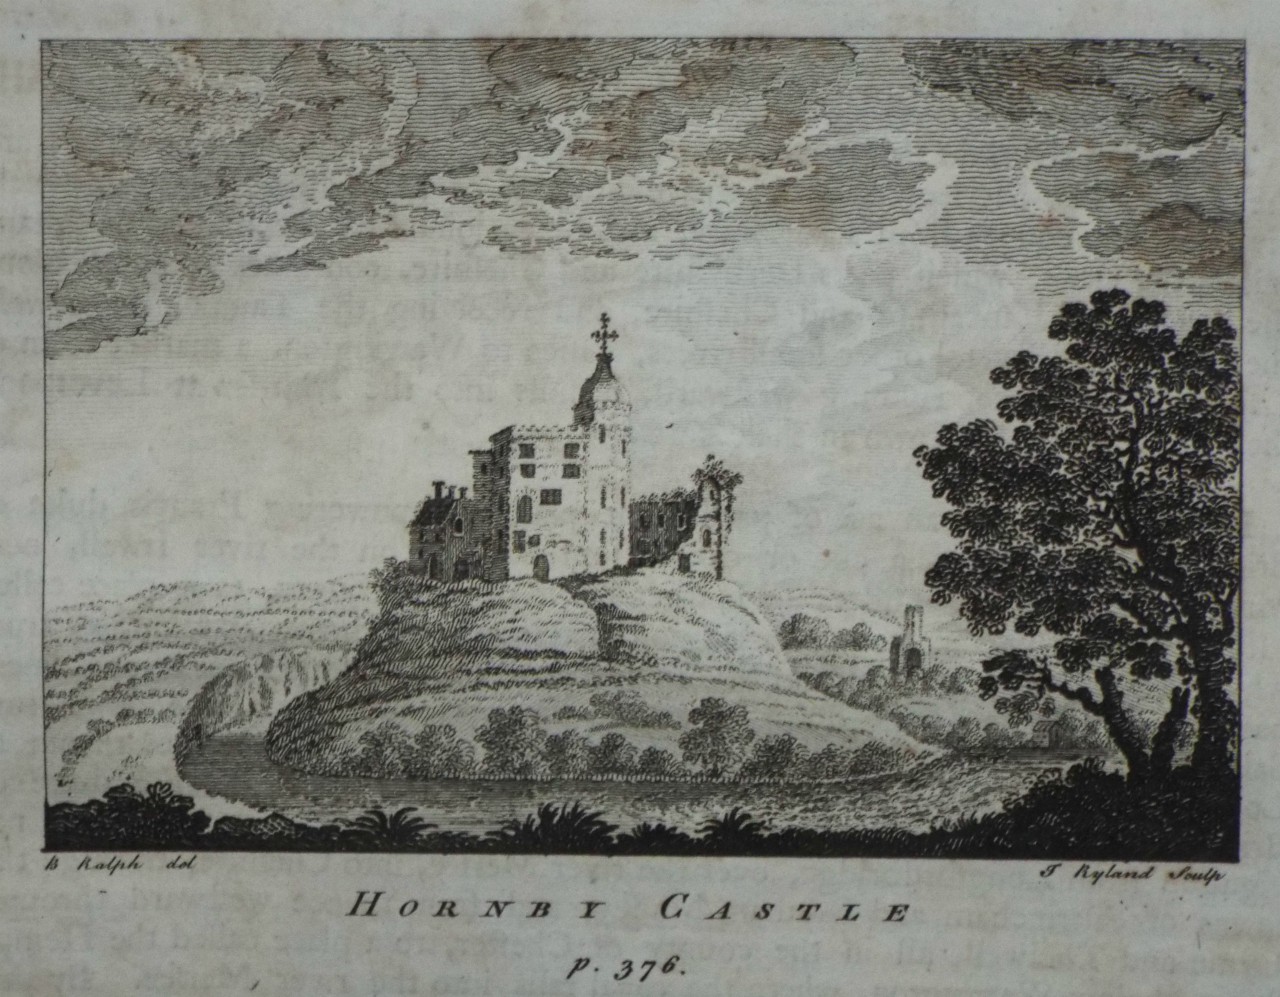 Print - Hornby Castle p.376. - Ryland